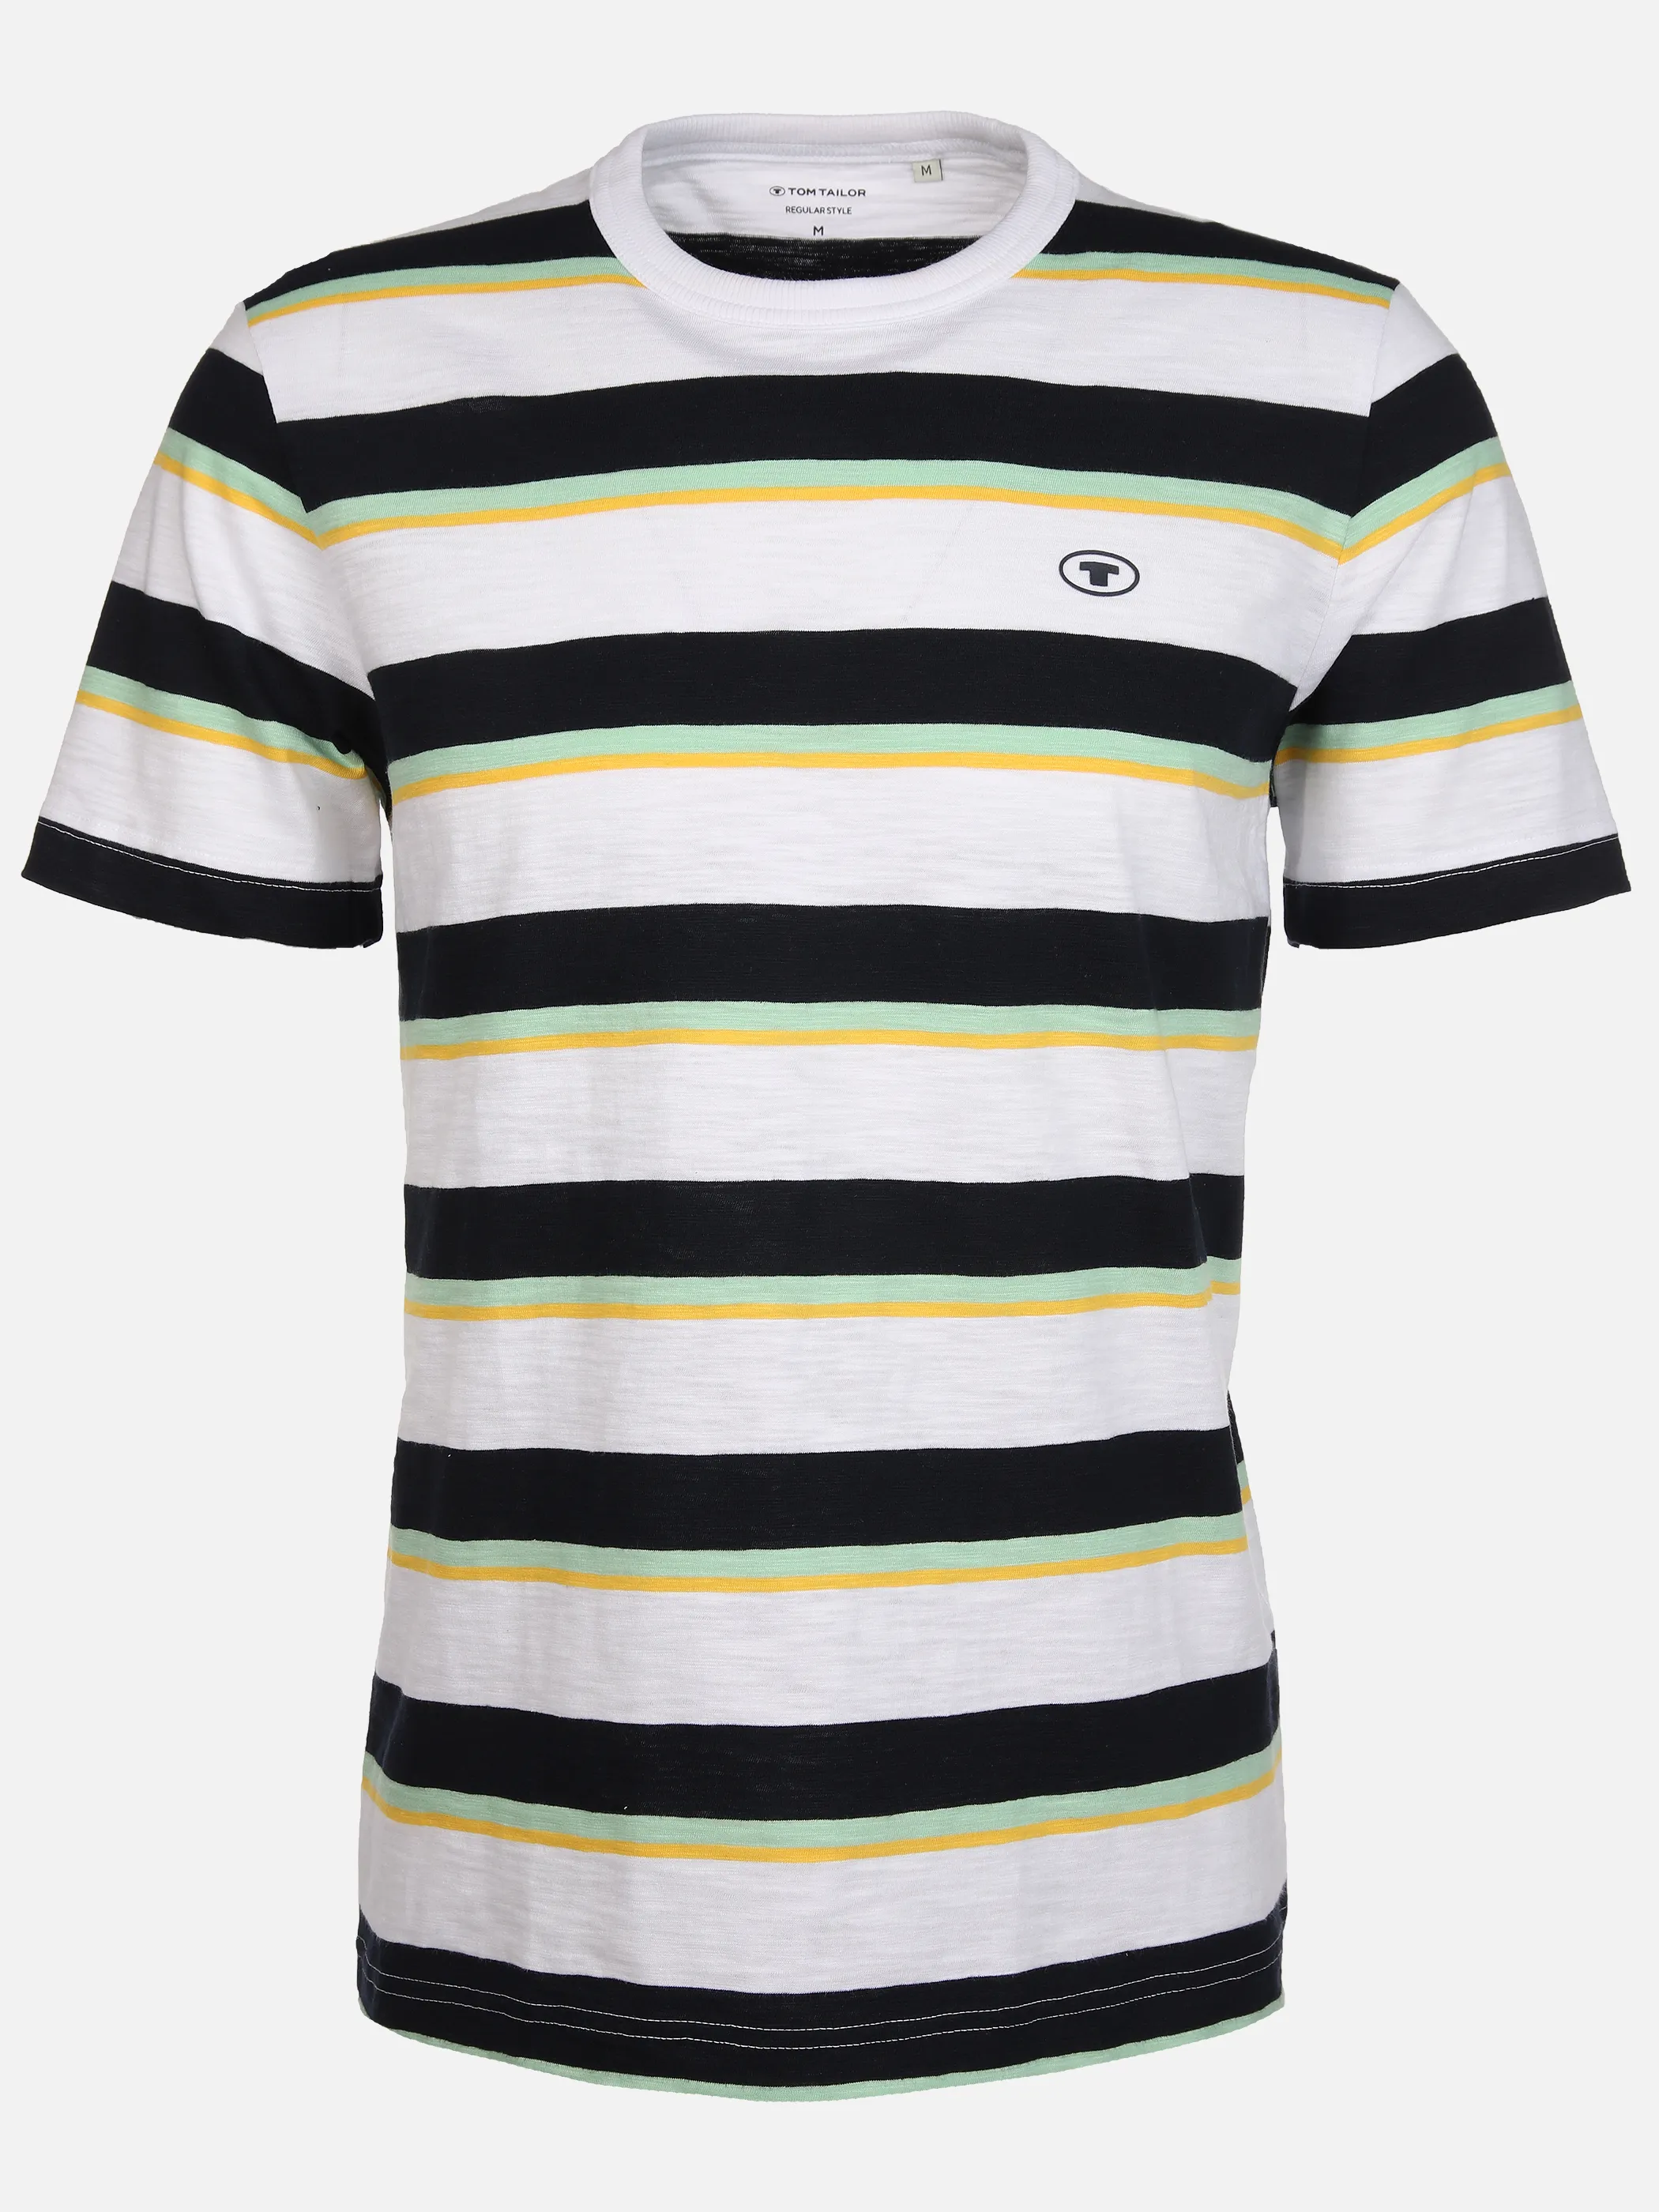 Tom Tailor 1040935 striped t-shirt Weiß 890952 35071 1